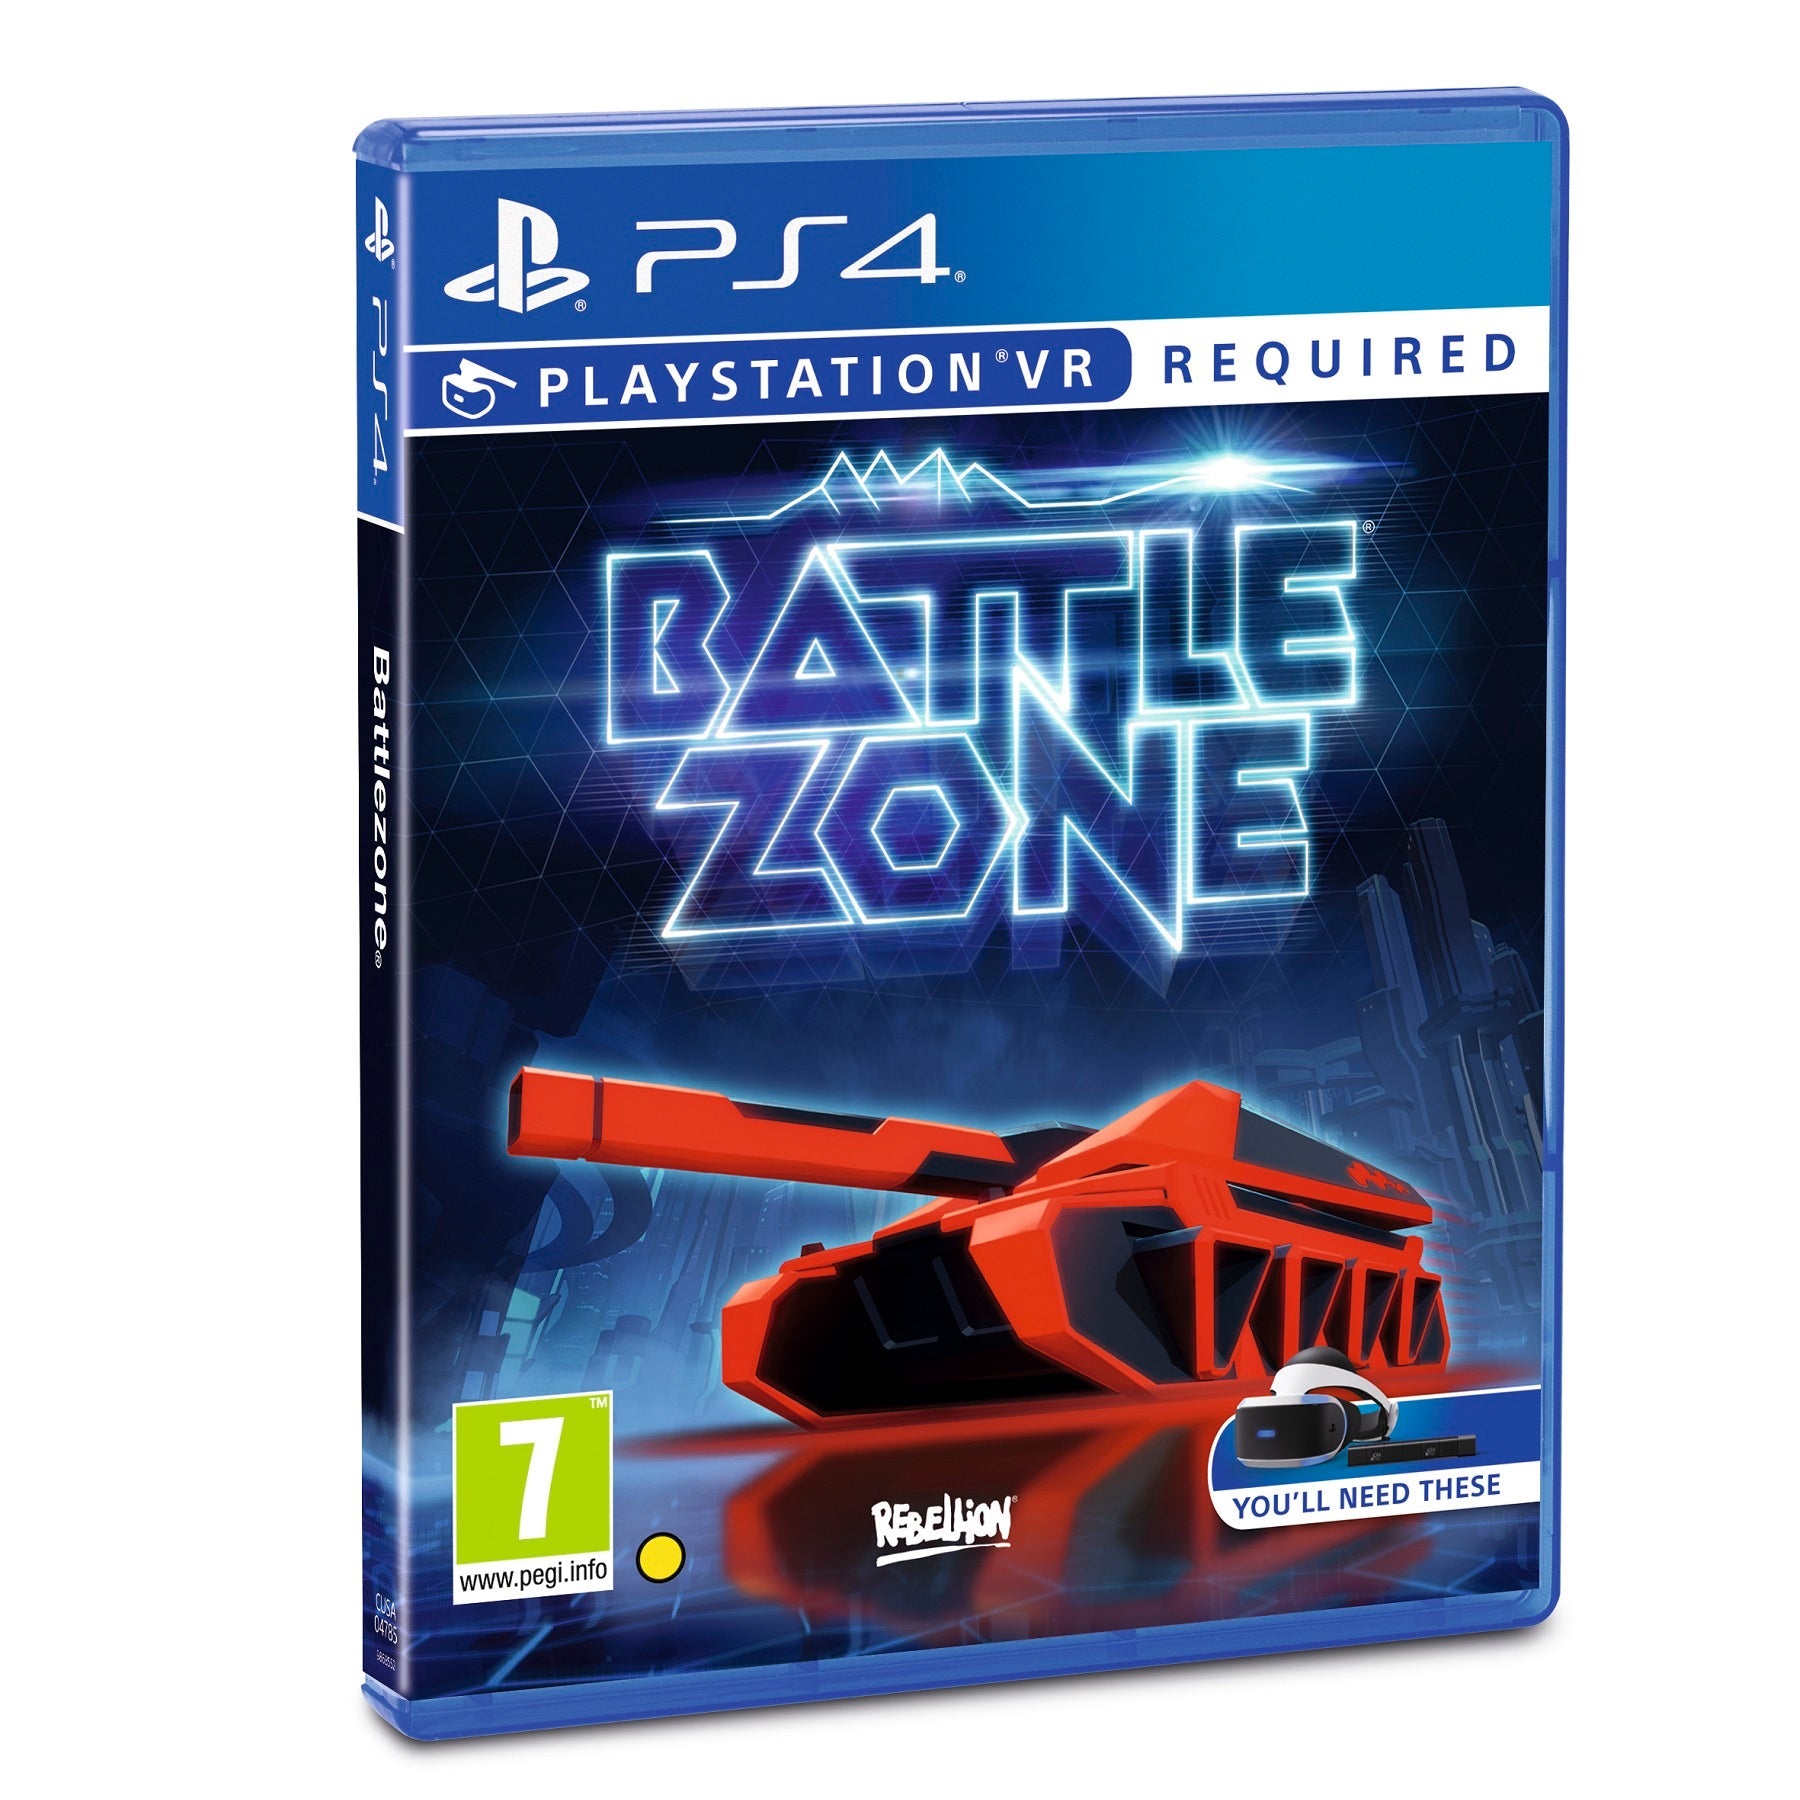 משחק Battelzone VR